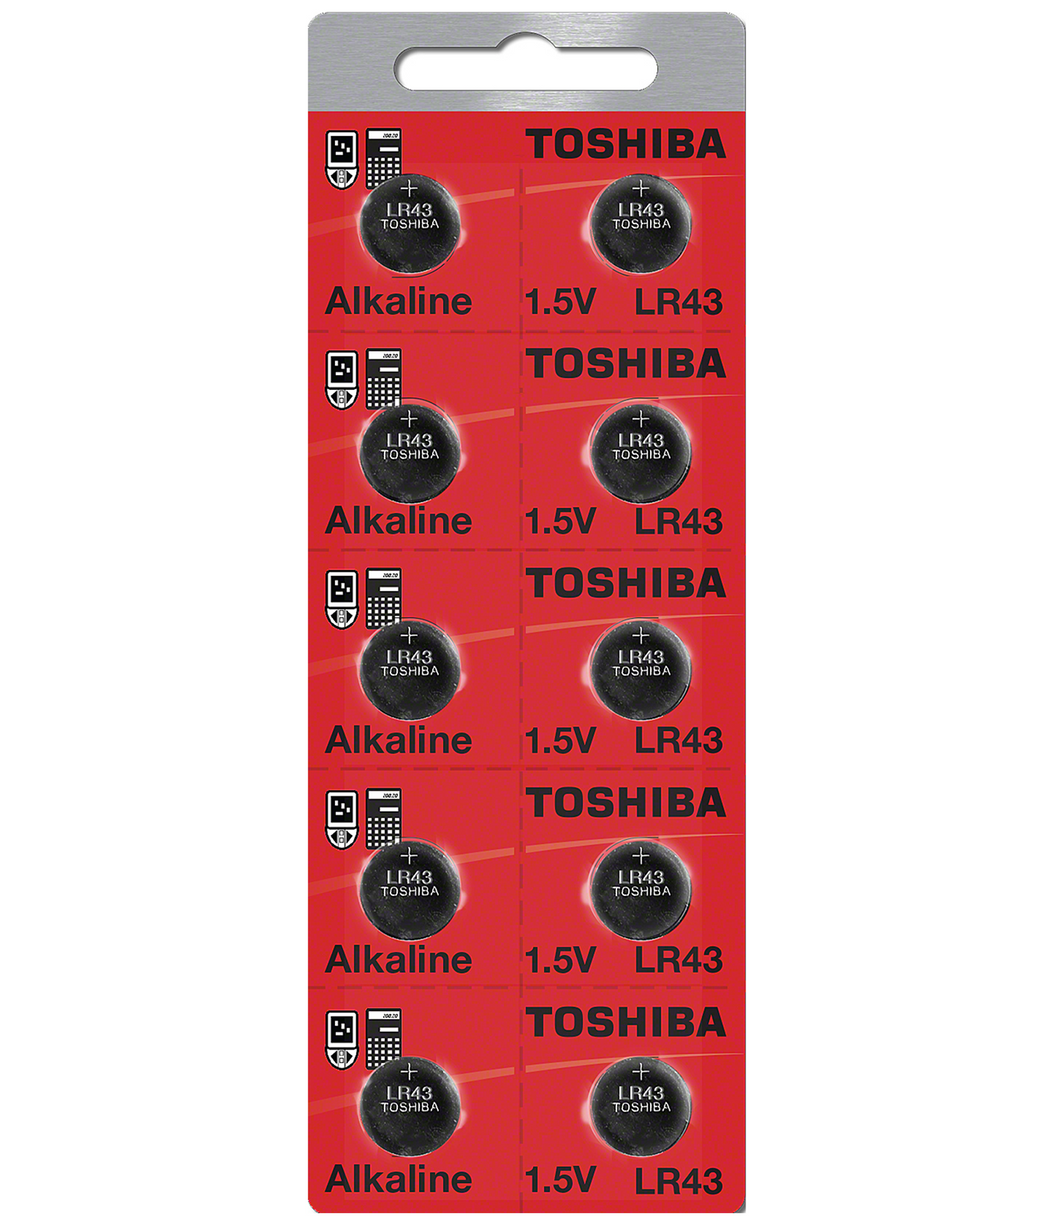 Toshiba LR43 Alkaline Battery BOX of 100